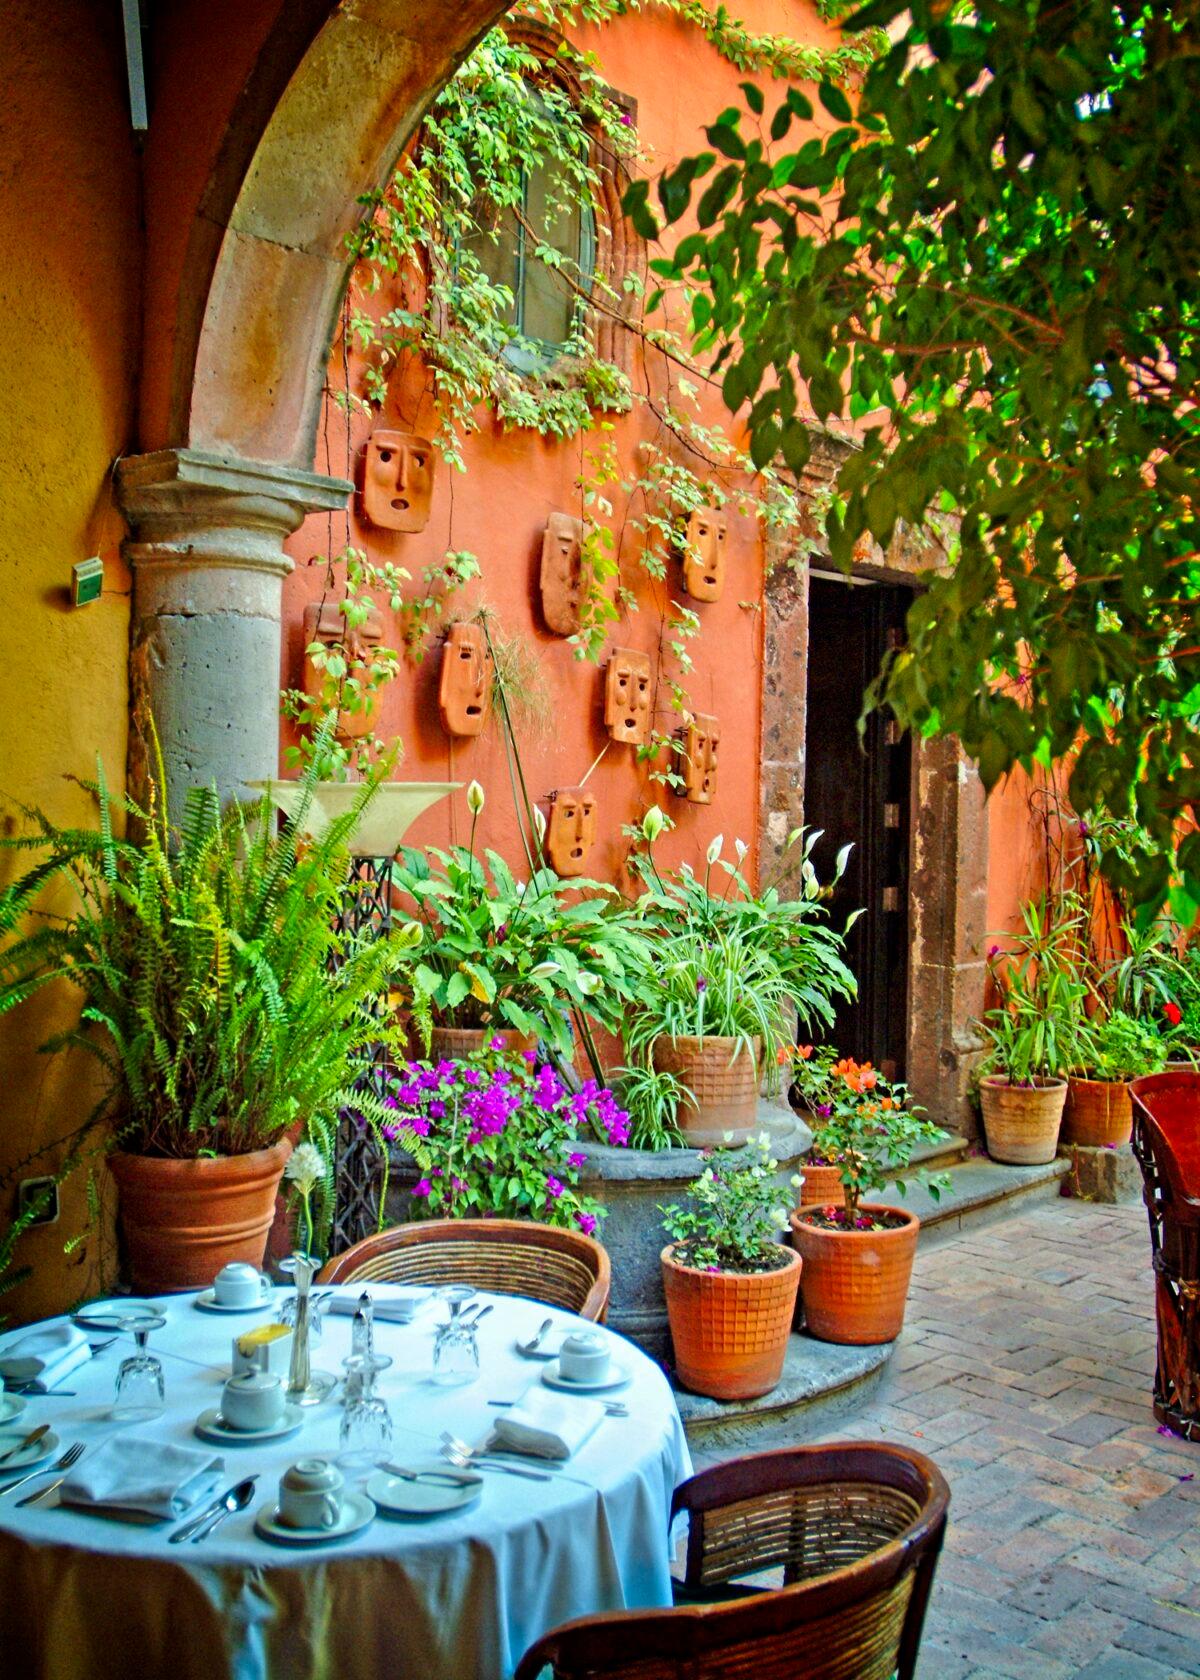 The courtyard dining area at the hotel Casa De Sierra Nevada. (Fred J. Eckert)